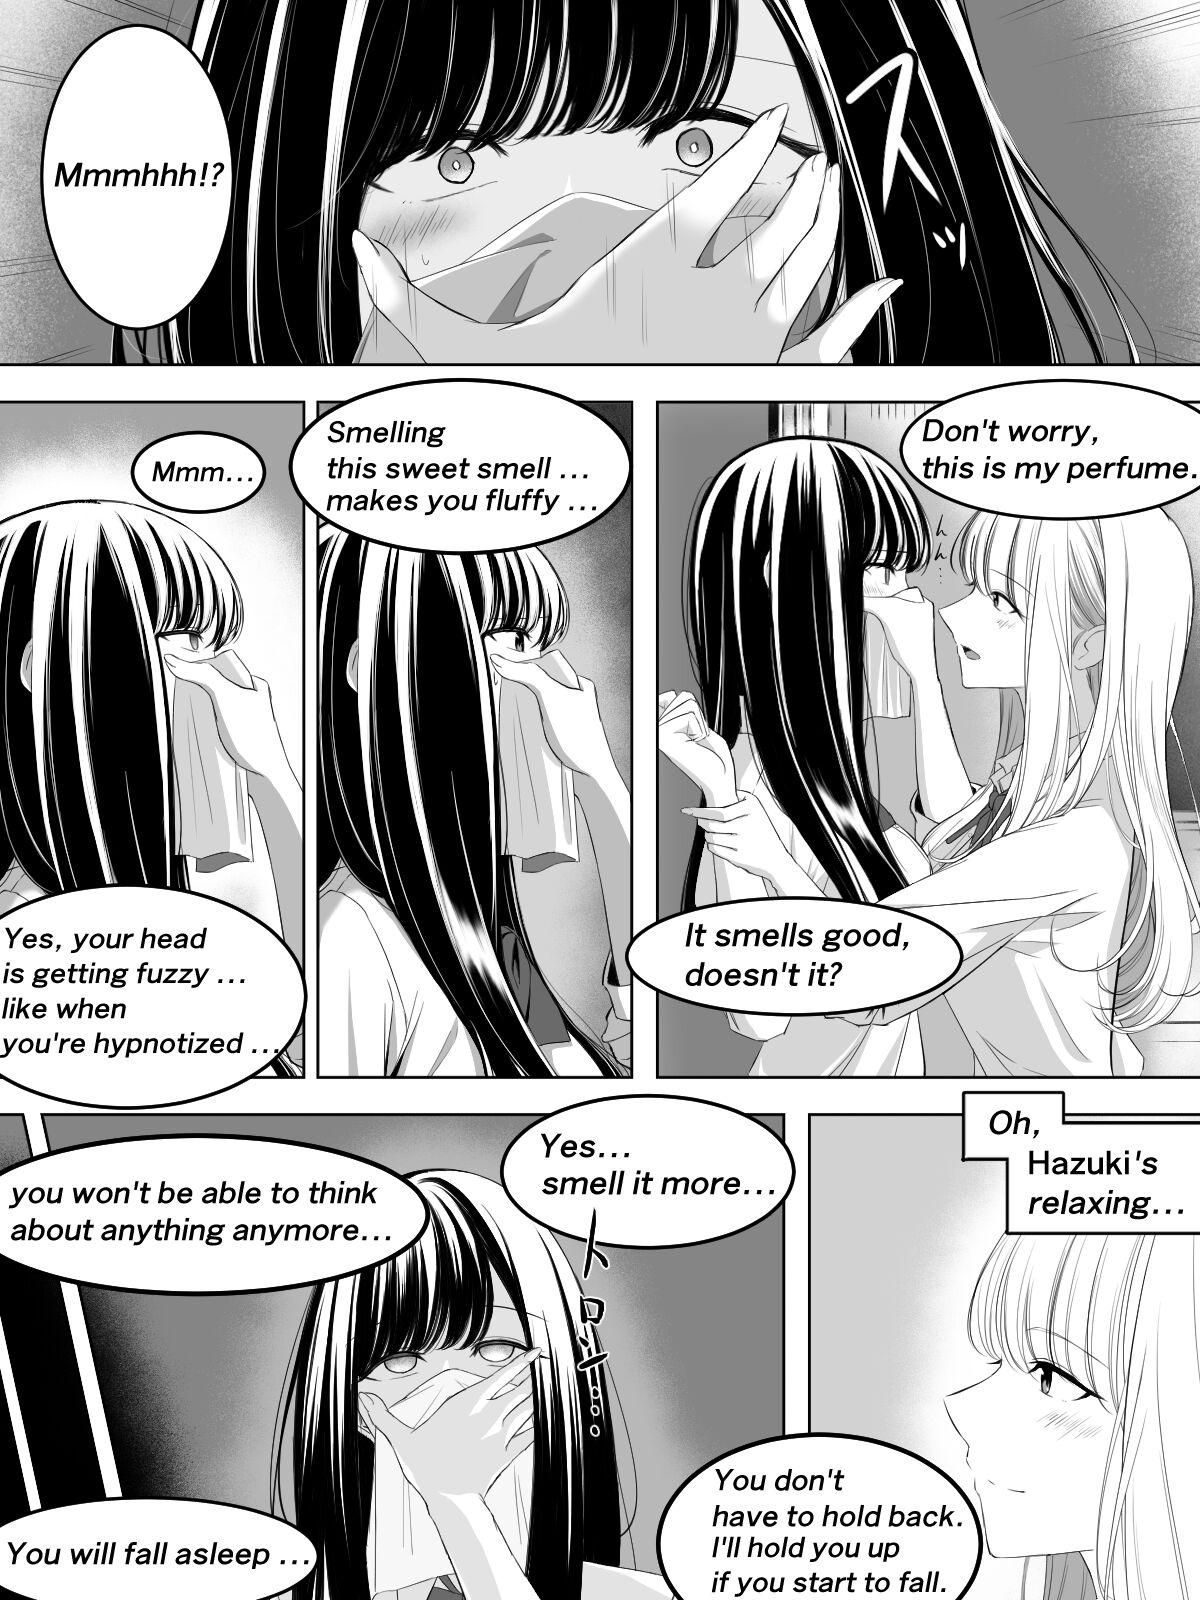 Yuri comic Part 1,2 and 3. 12